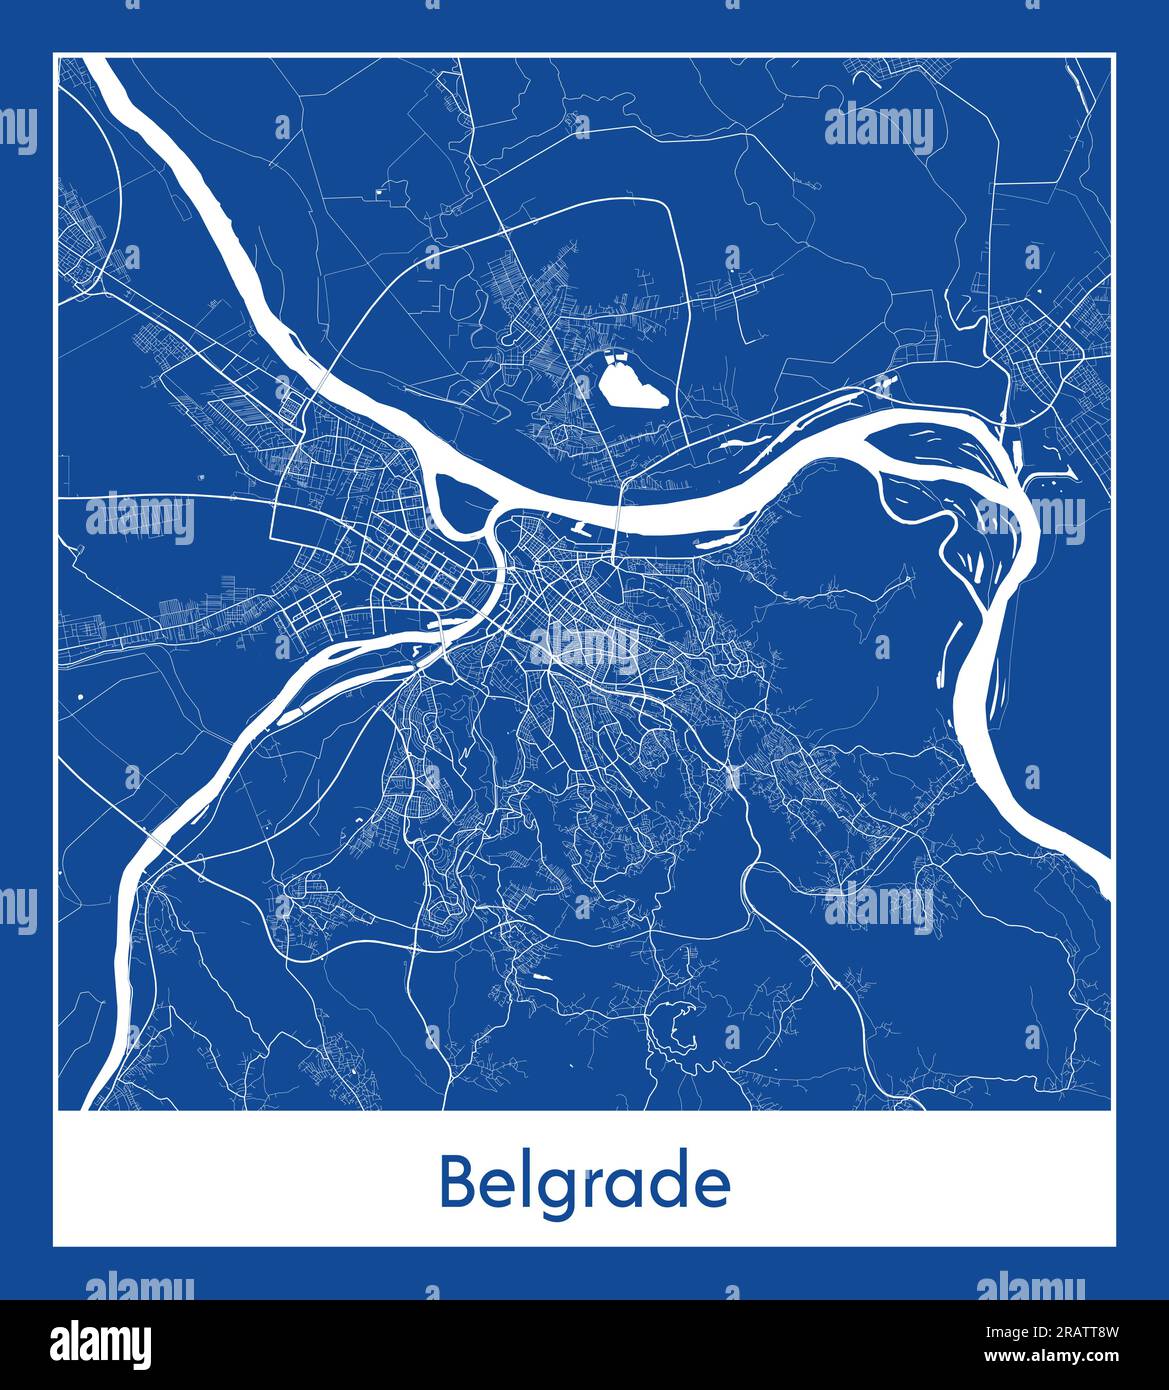 Belgrade Serbia Europe City map blue print vector illustration Stock Vector